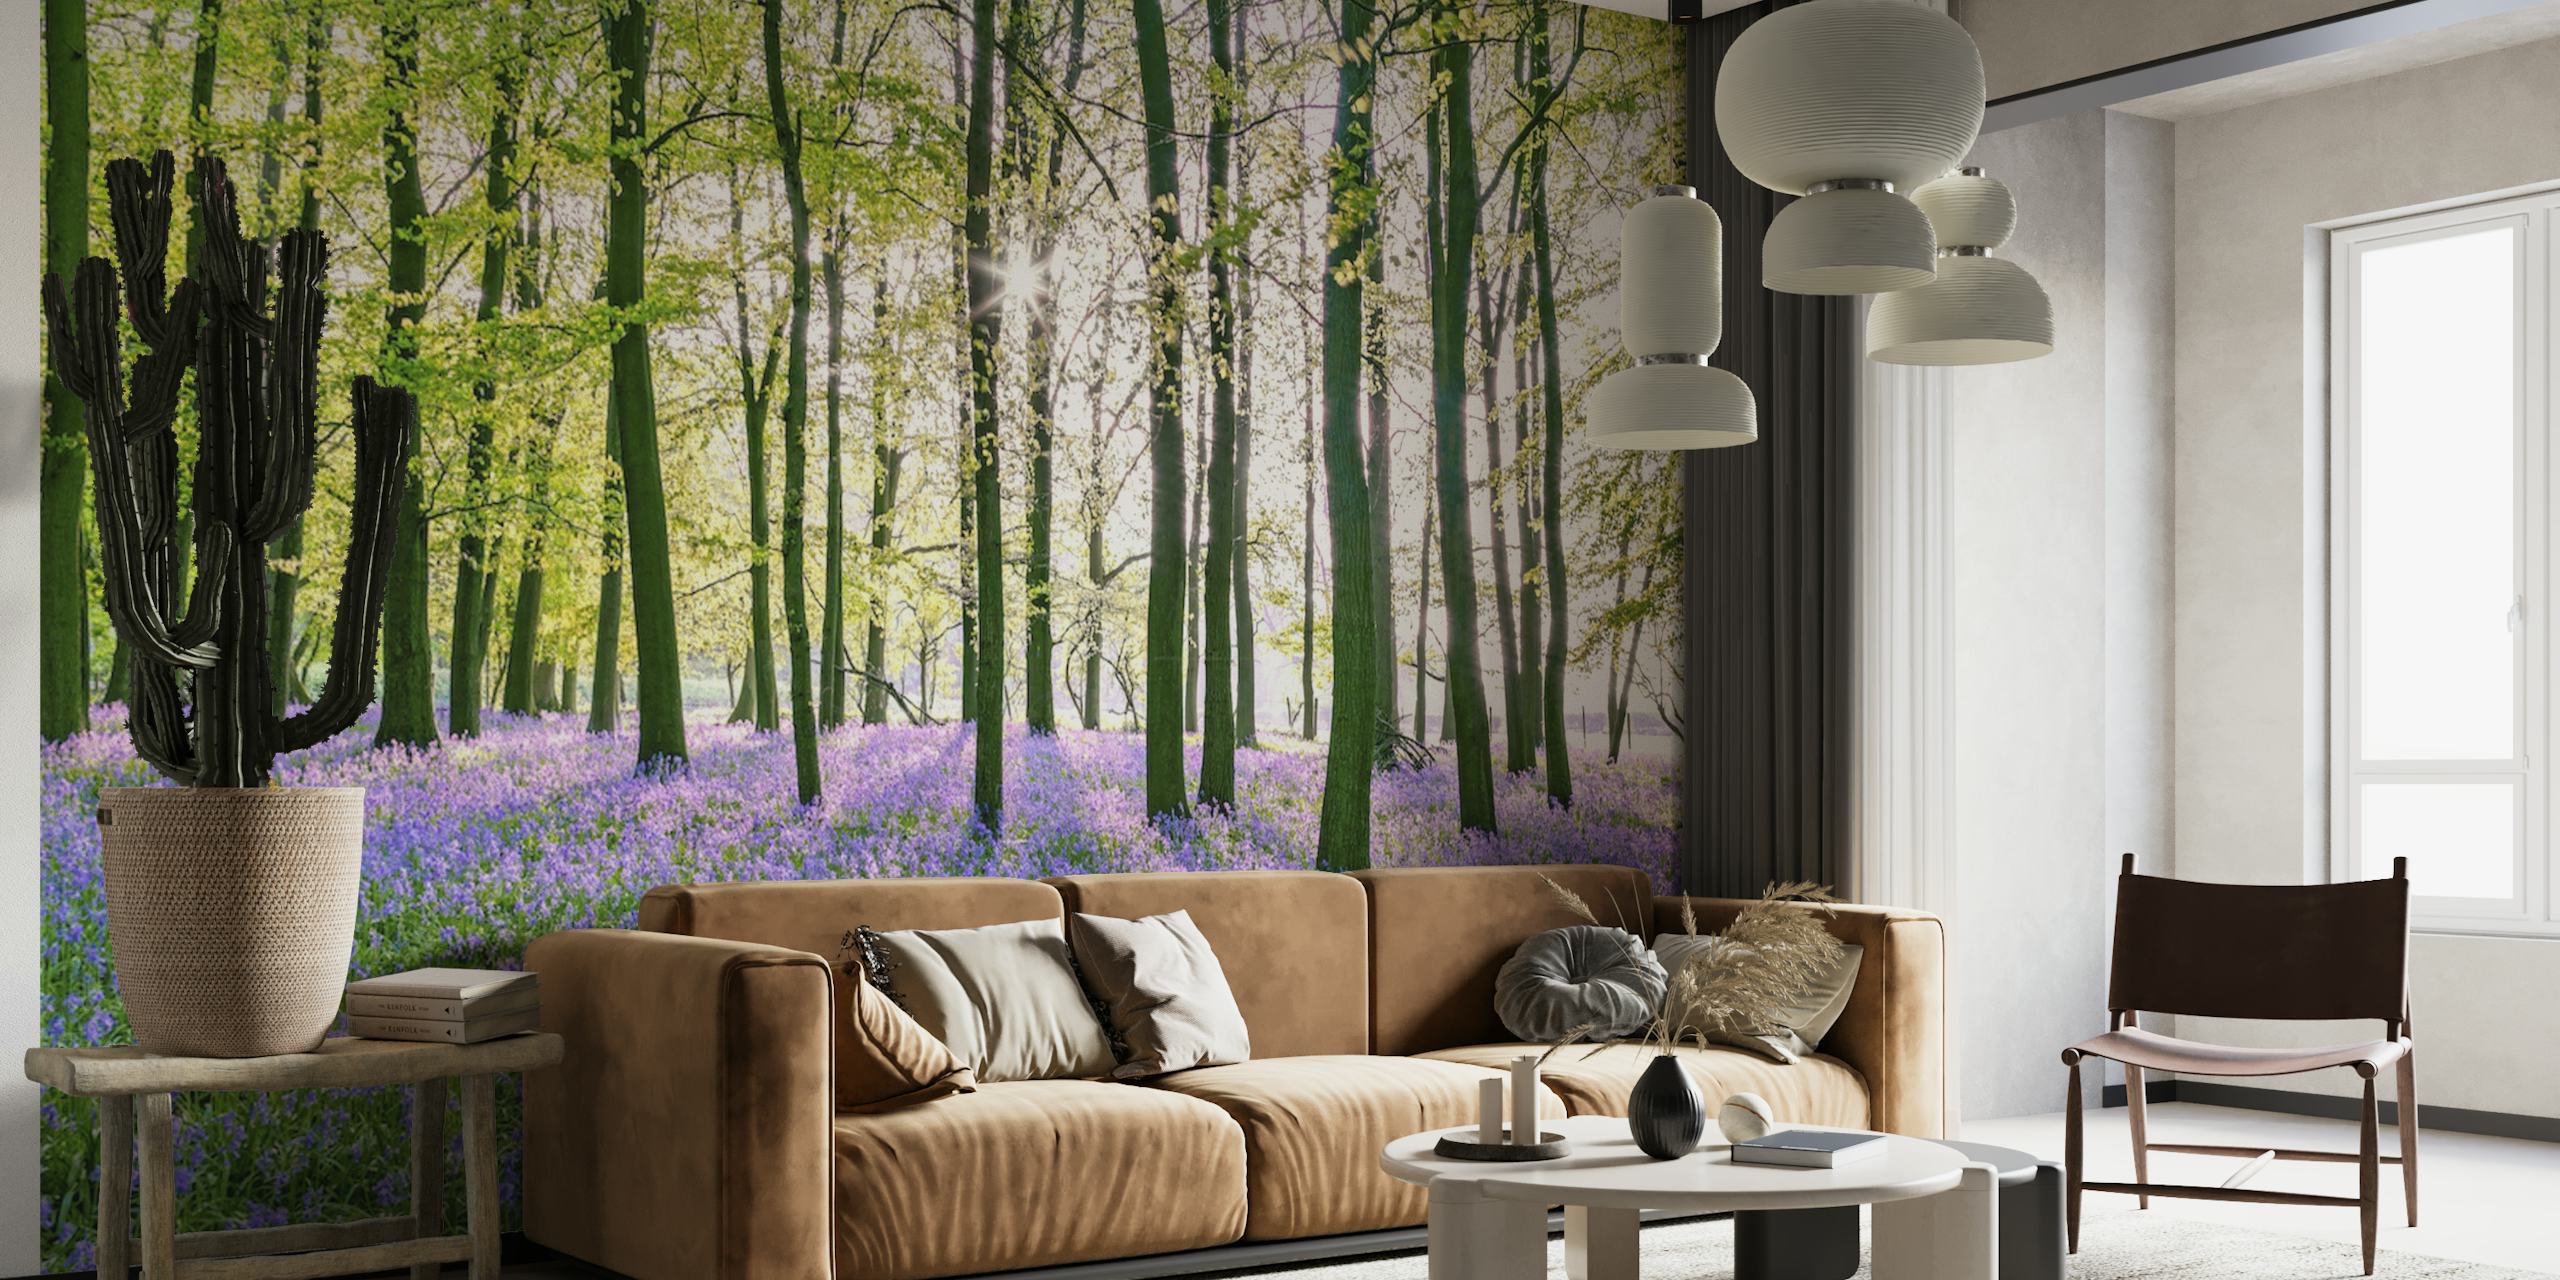 Et fredfyldt blåklokkeskov-vægmaleri med en frodig grøn baldakin og livlige lilla blomster, der dækker skovbunden.